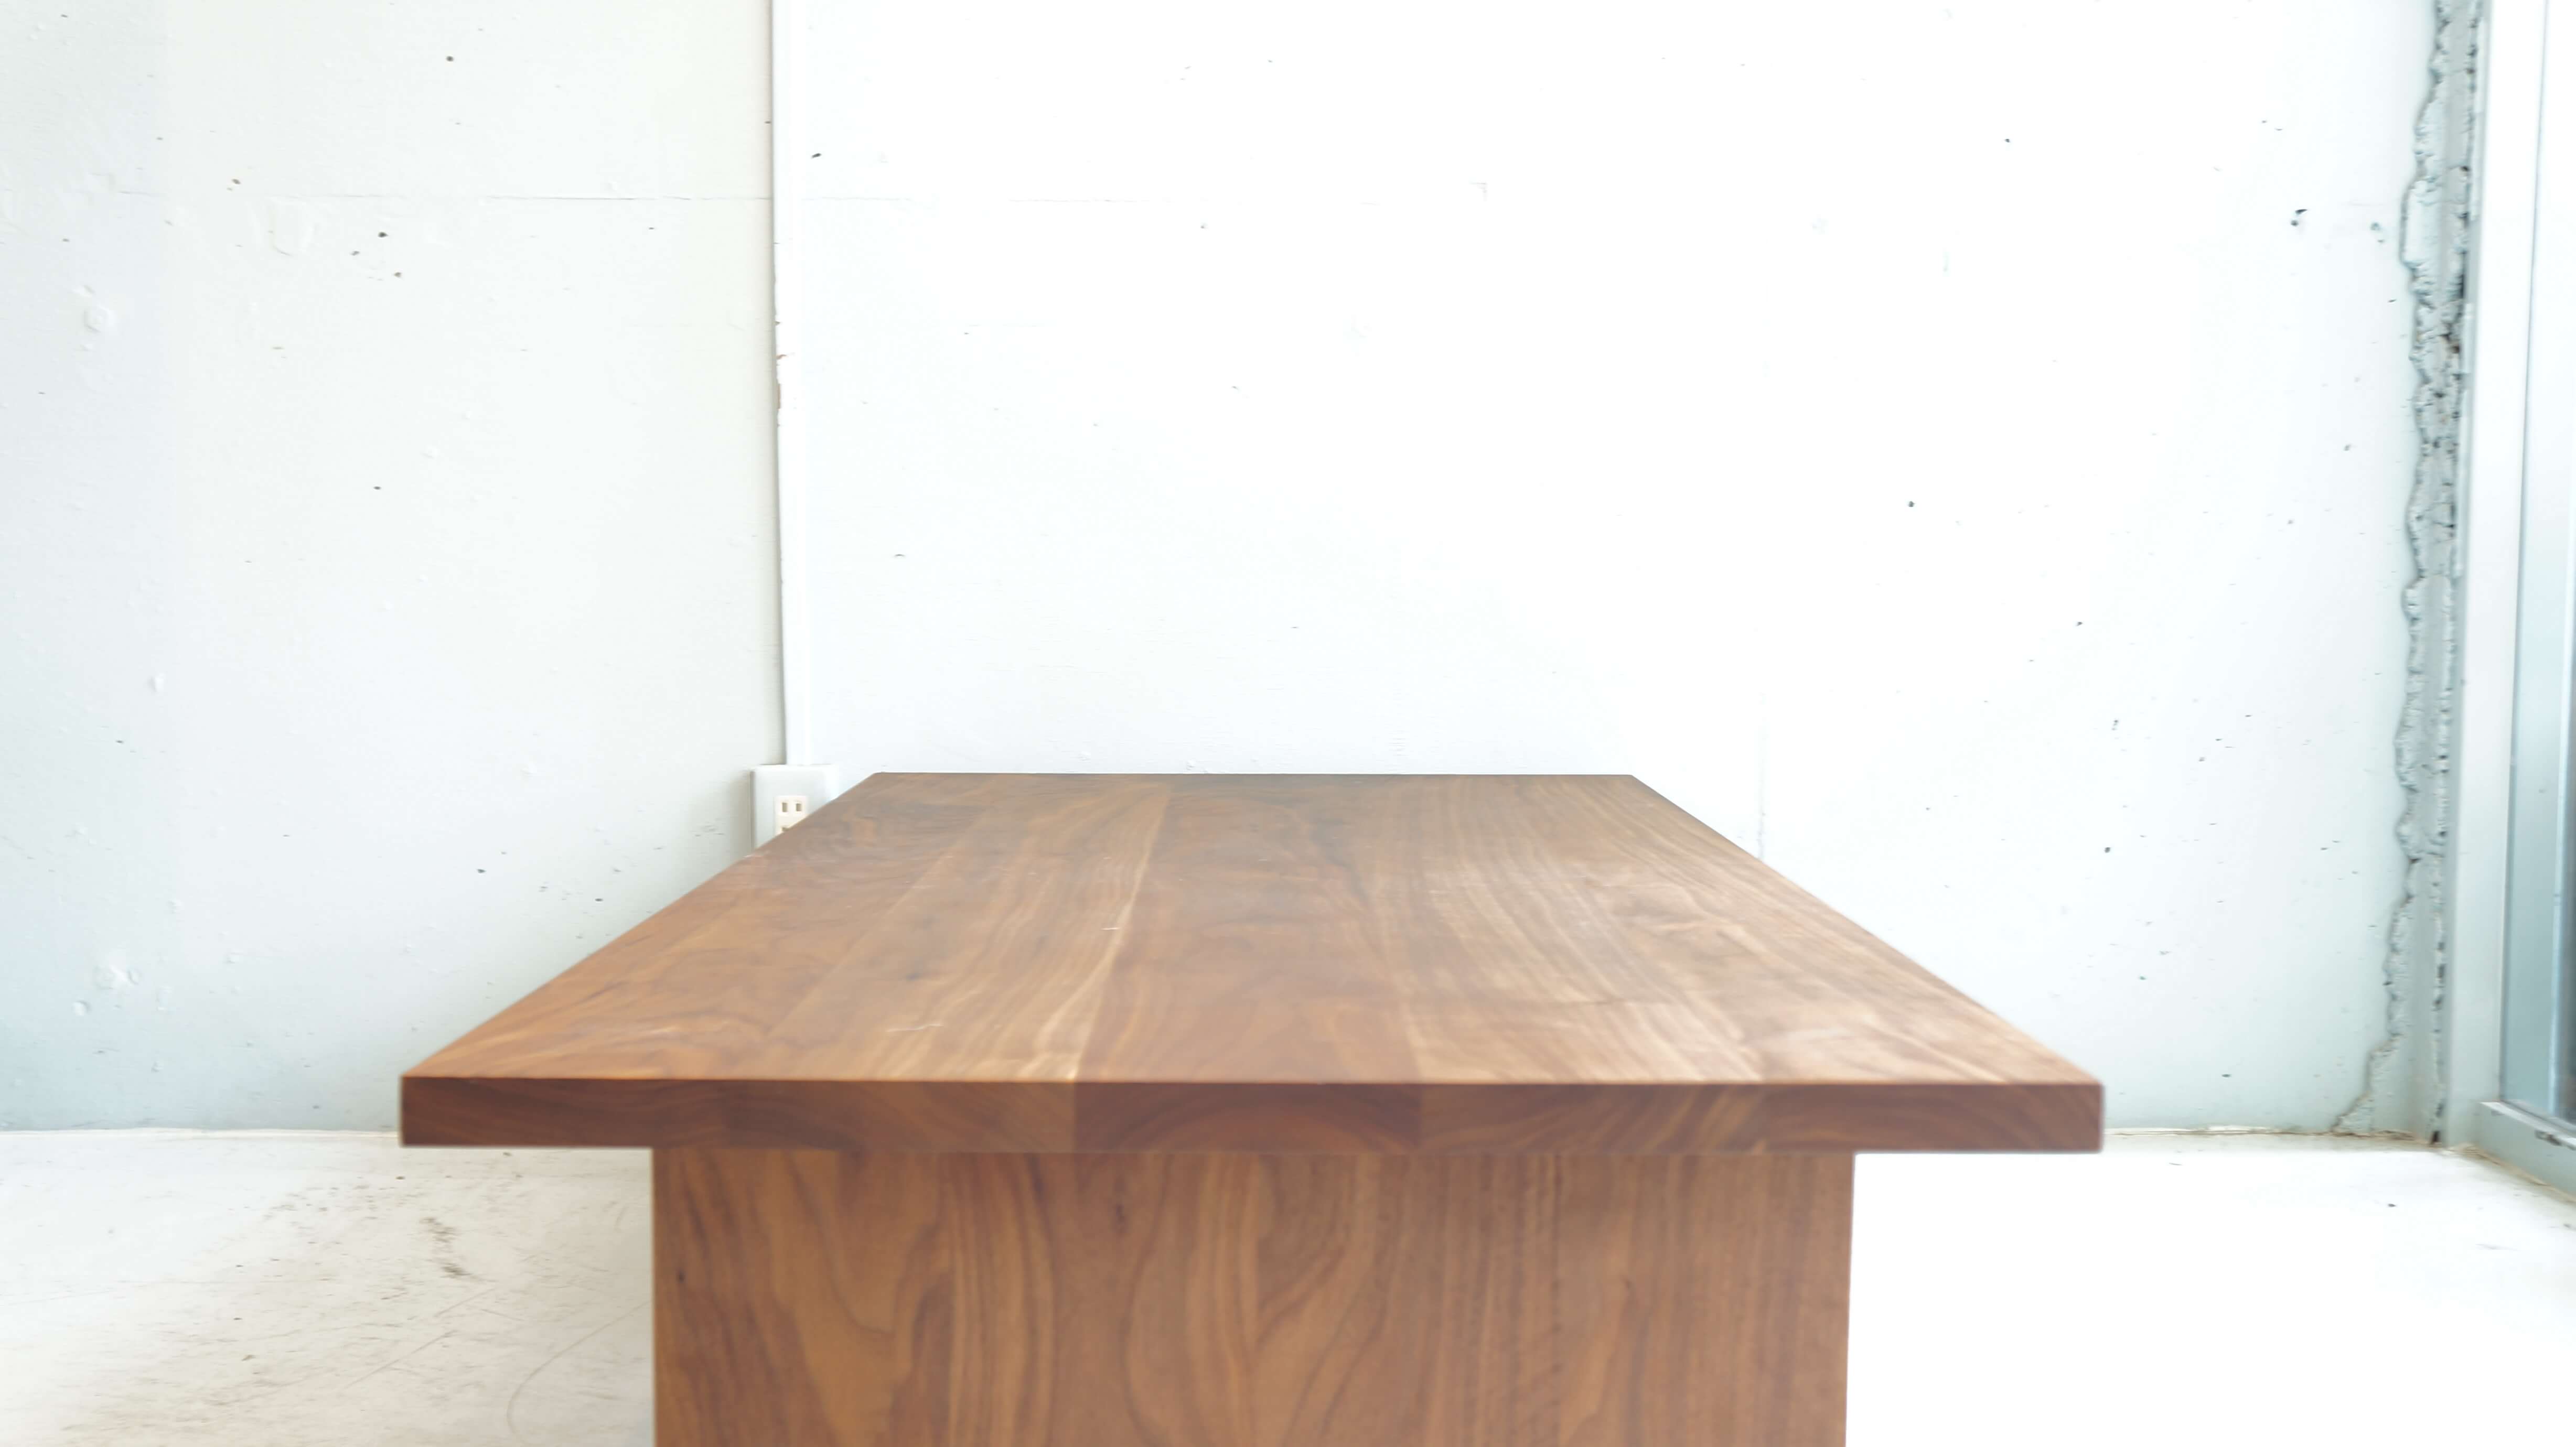 MUJI WALNUT WOOD CENTER TABLE / 無印良品 ウォールナット センターテーブル オーダーメイド